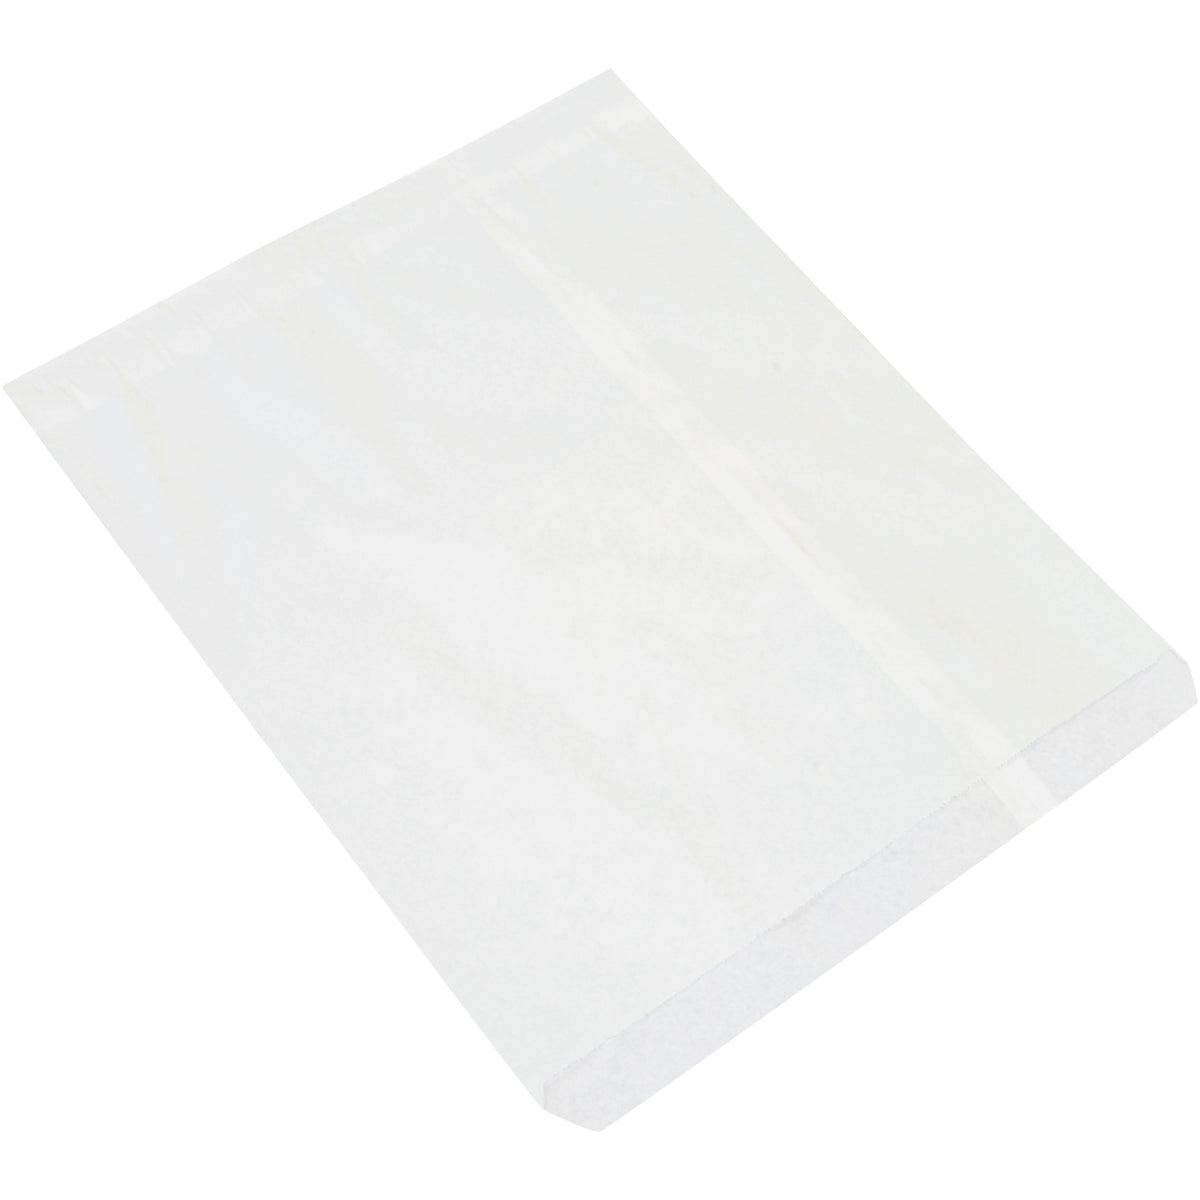 15 x 18 White Flat Merchandise Bags 500/Case